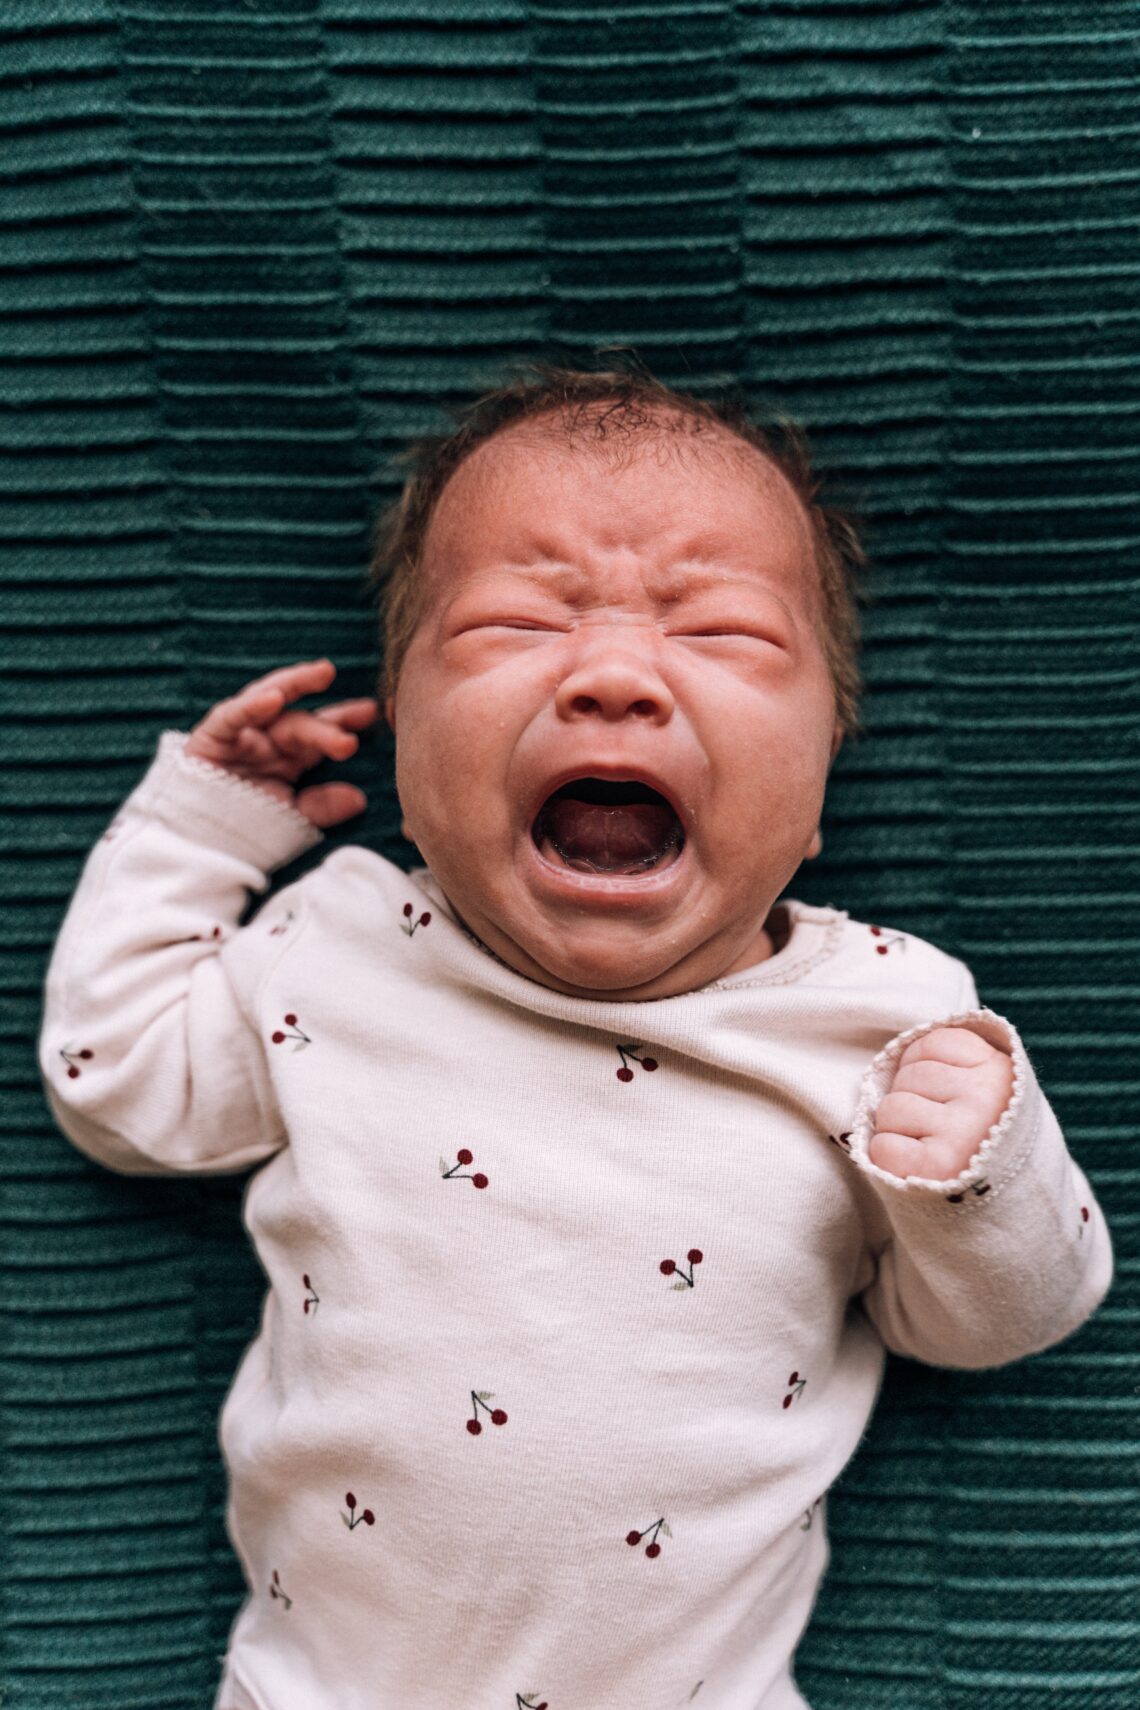 liknologio-infant massage baby cry